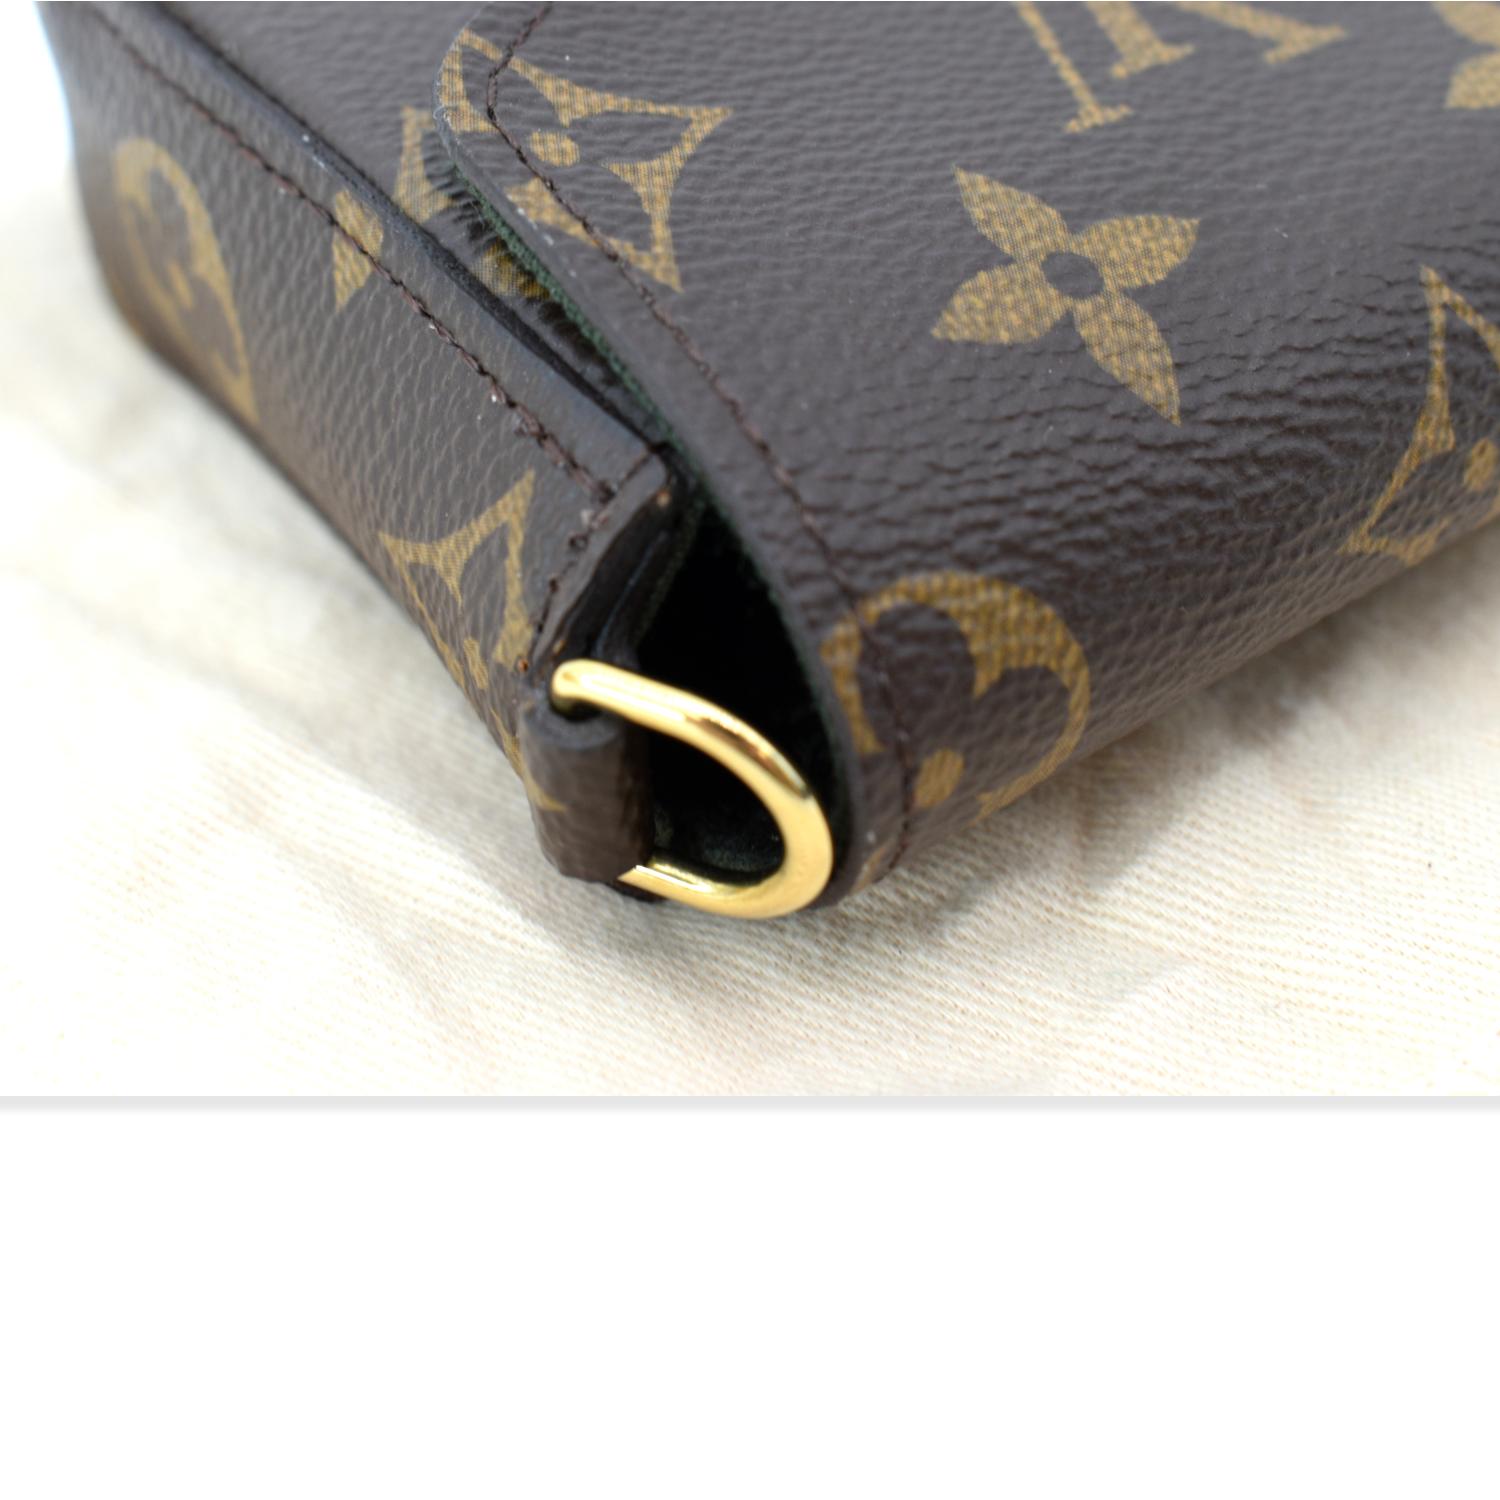 LOUIS VUITTON FELICIE Strap & Go Handbag Monogram Canvas Brown £800.00 -  PicClick UK